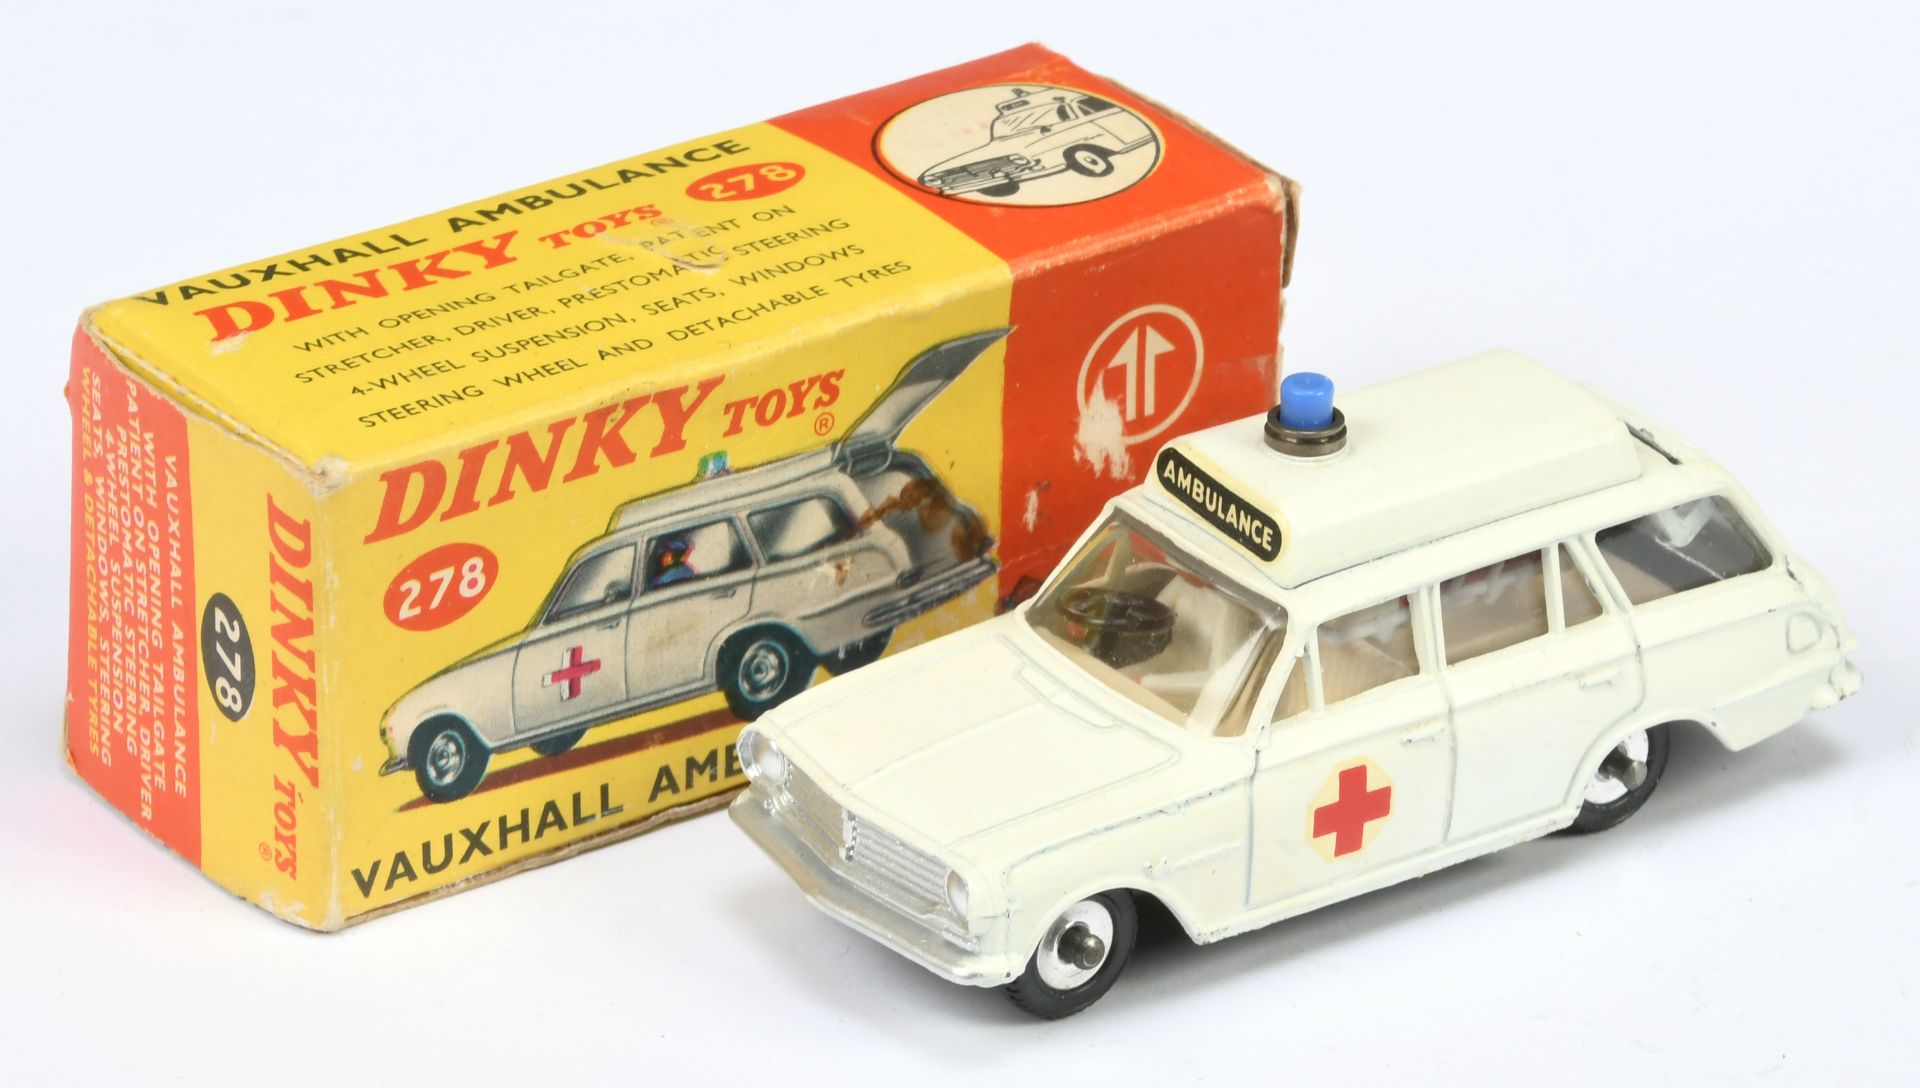 Dinky Toys 278 Vauxhall "Ambulance" Estate Car - White body, cream interior (harder colour to fin...